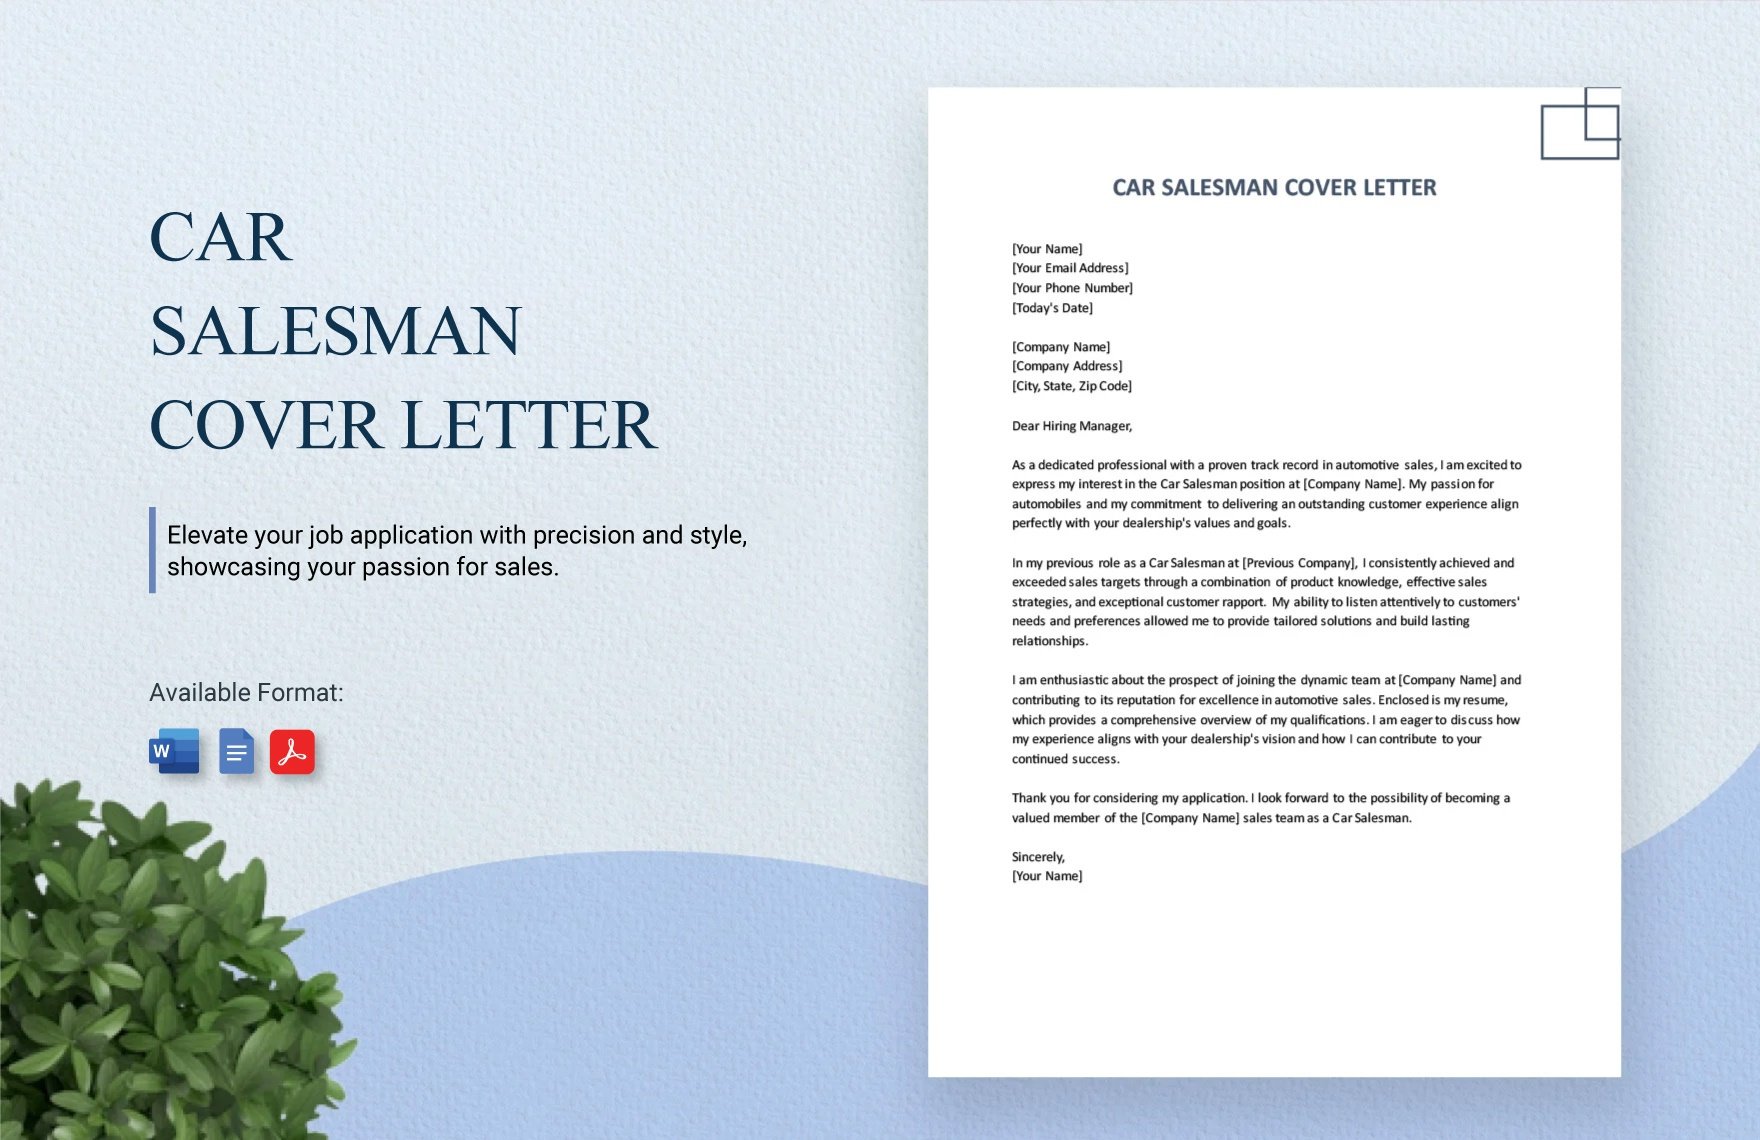 Car Salesman Cover Letter in Word, Google Docs, PDF